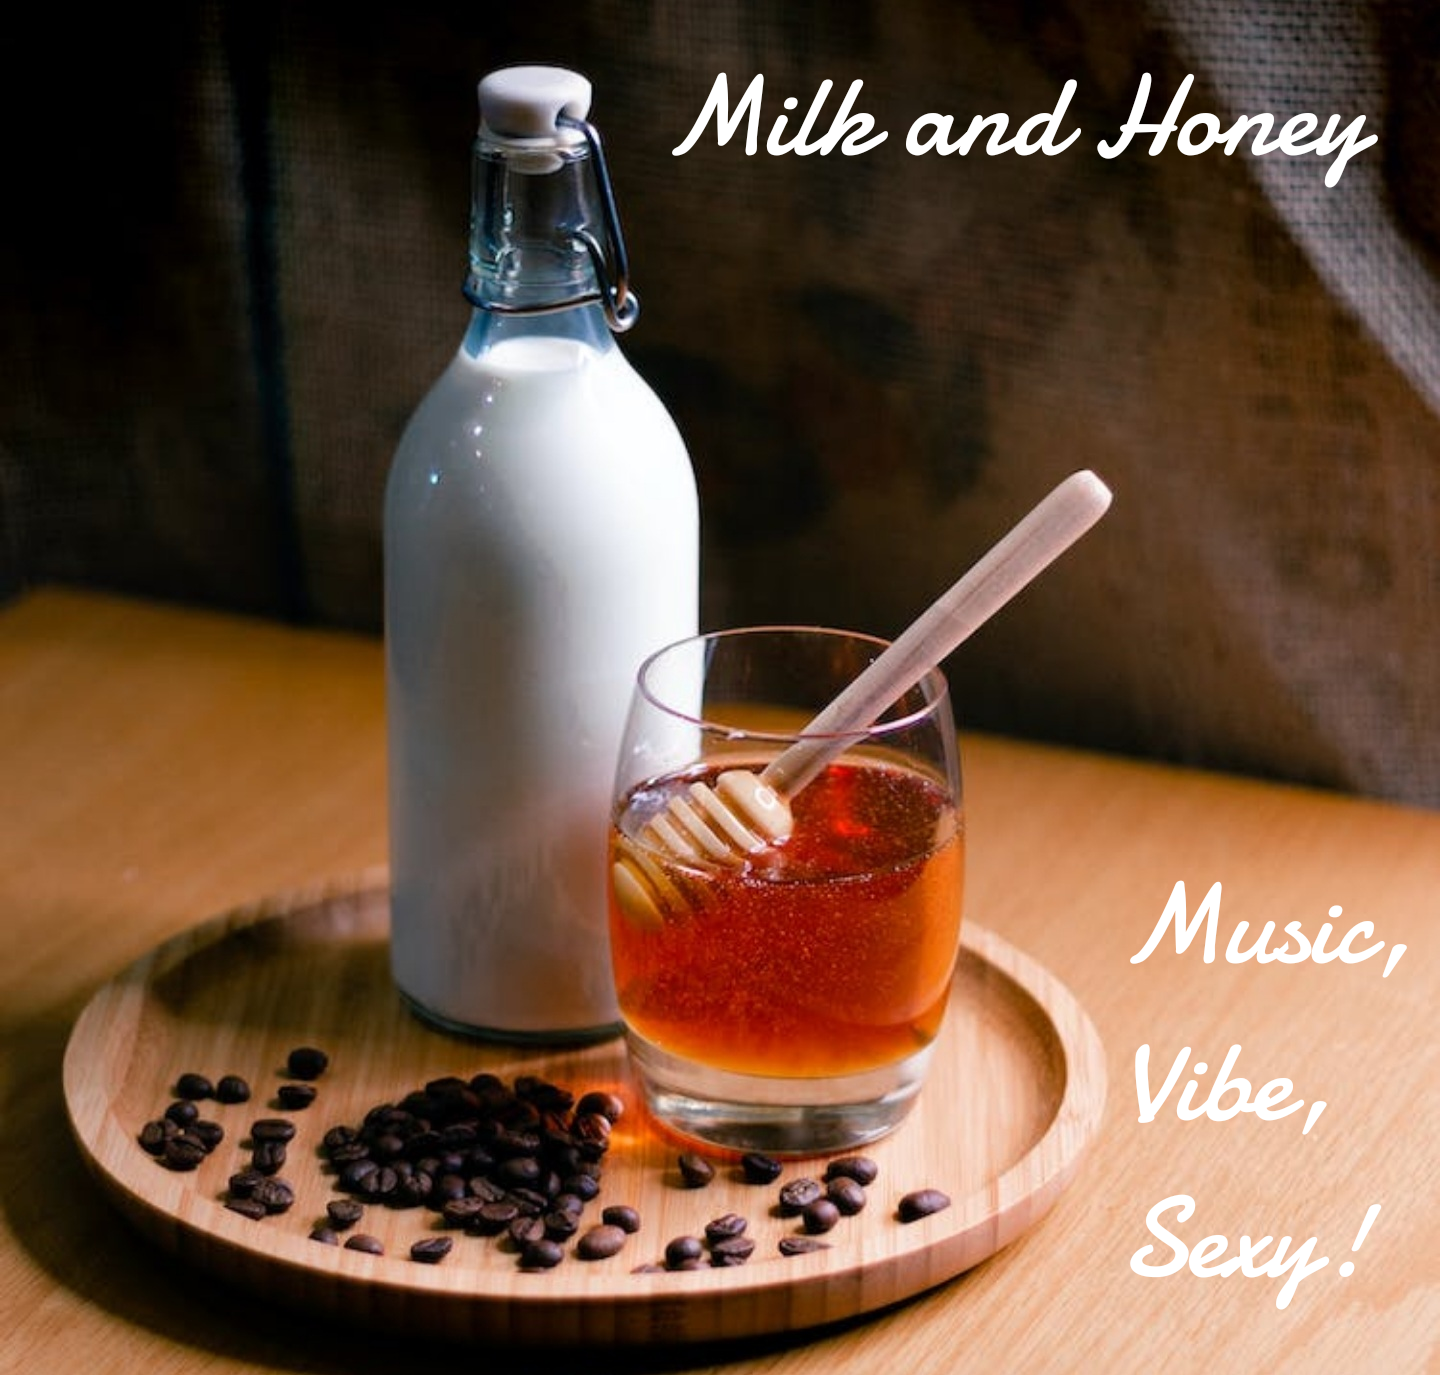 Milk and Honey 